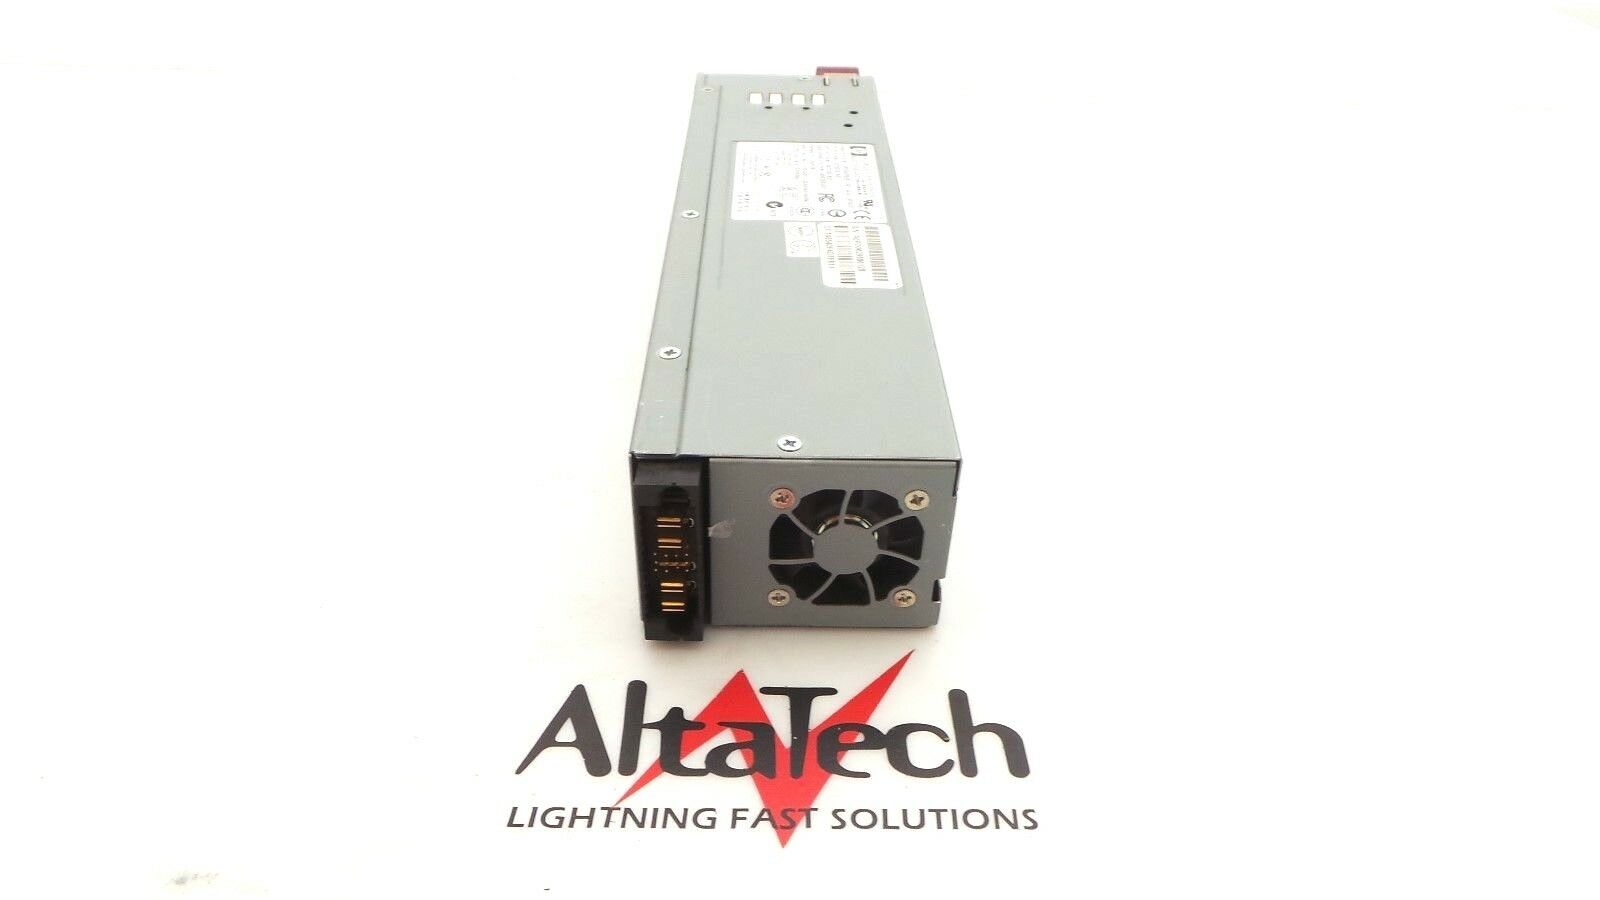 HP 321632-001 ProLiant DL380 G4 Server 575W Red PSU Power Supply Unit, Used